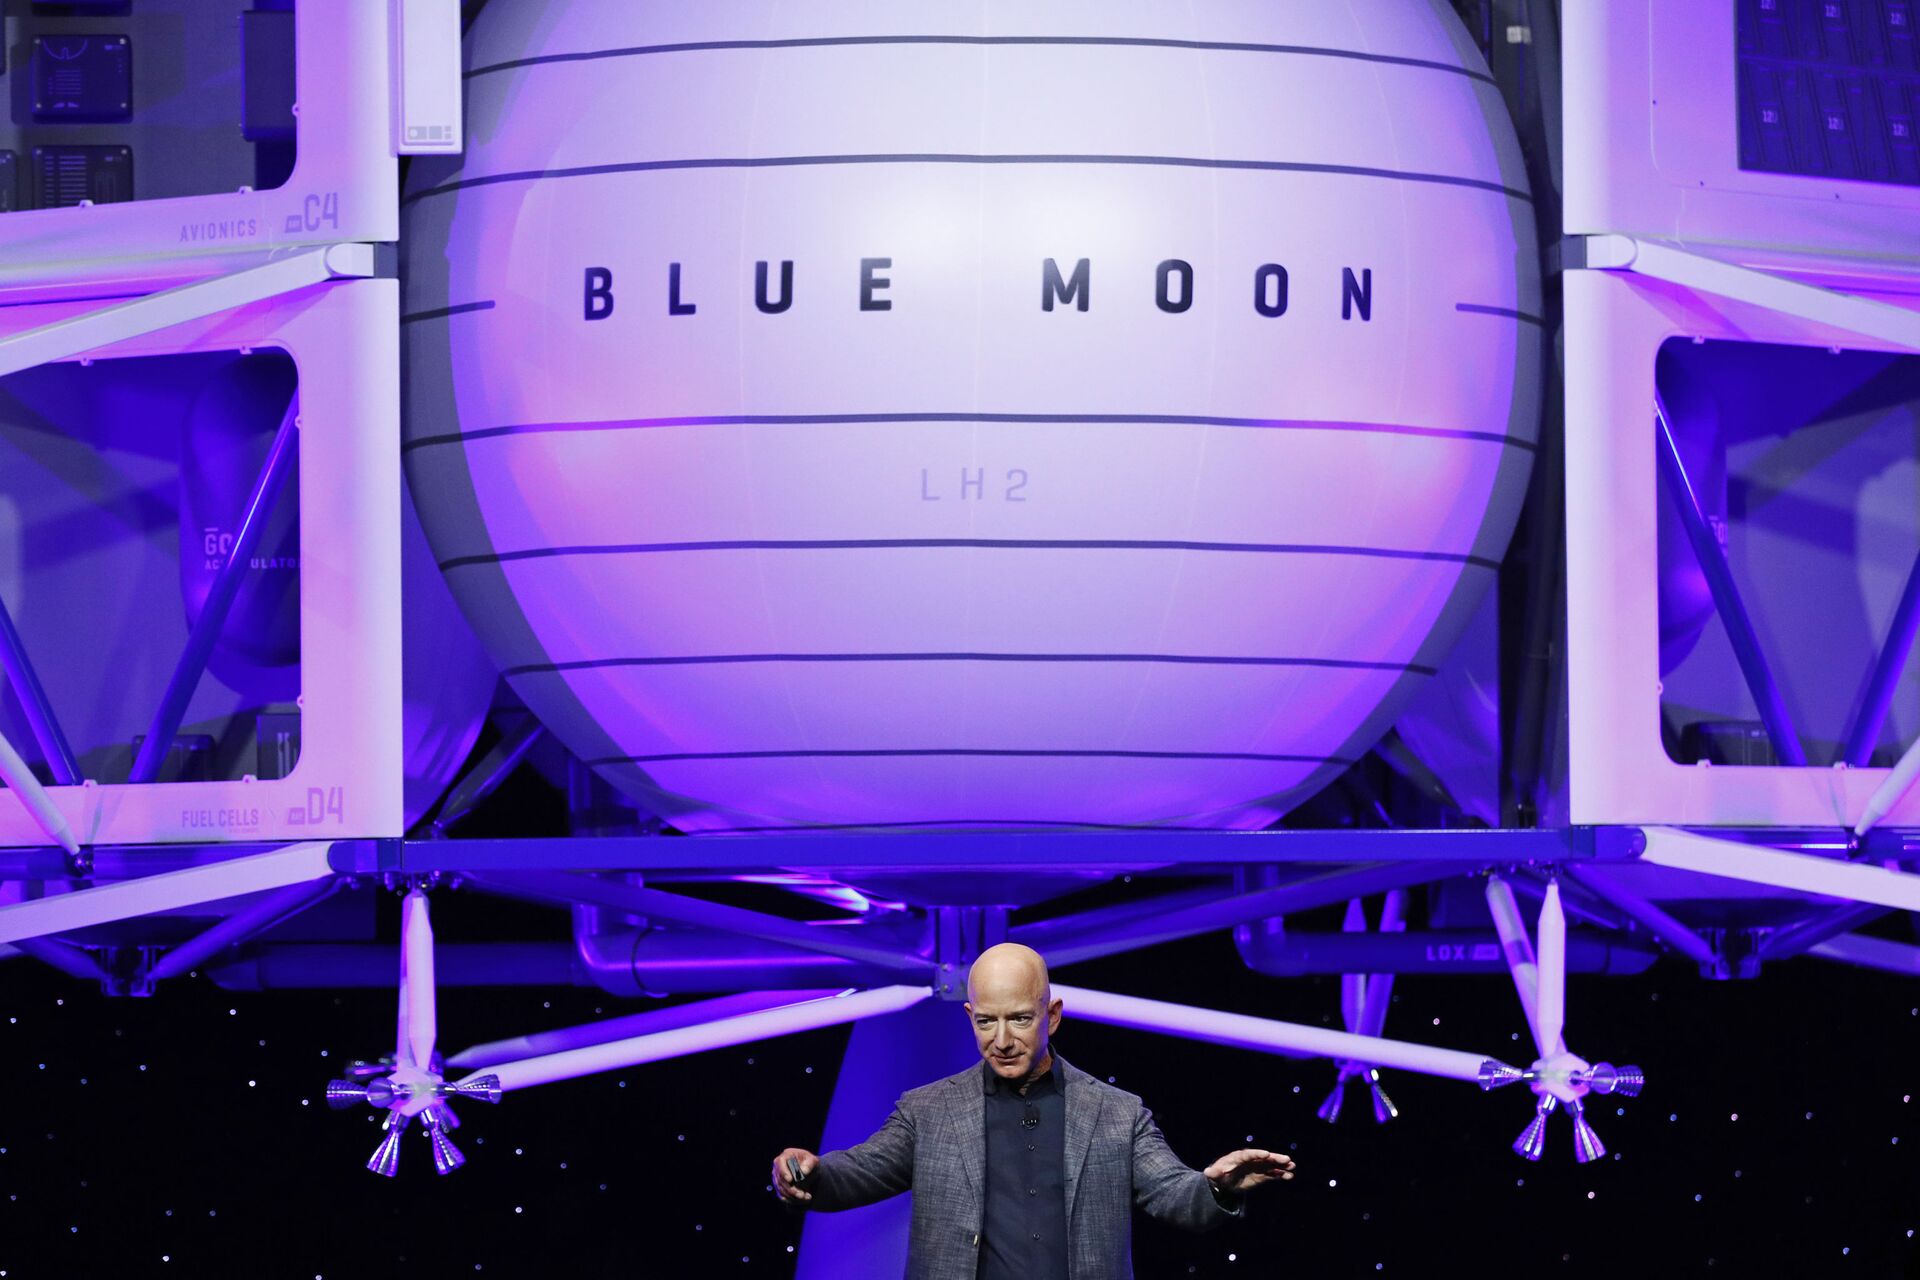 Is Jeff Bezos Set to Challenge Elon Musk in the Space Race With His Blue Origin Venture? - Sputnik International, 1920, 08.02.2021